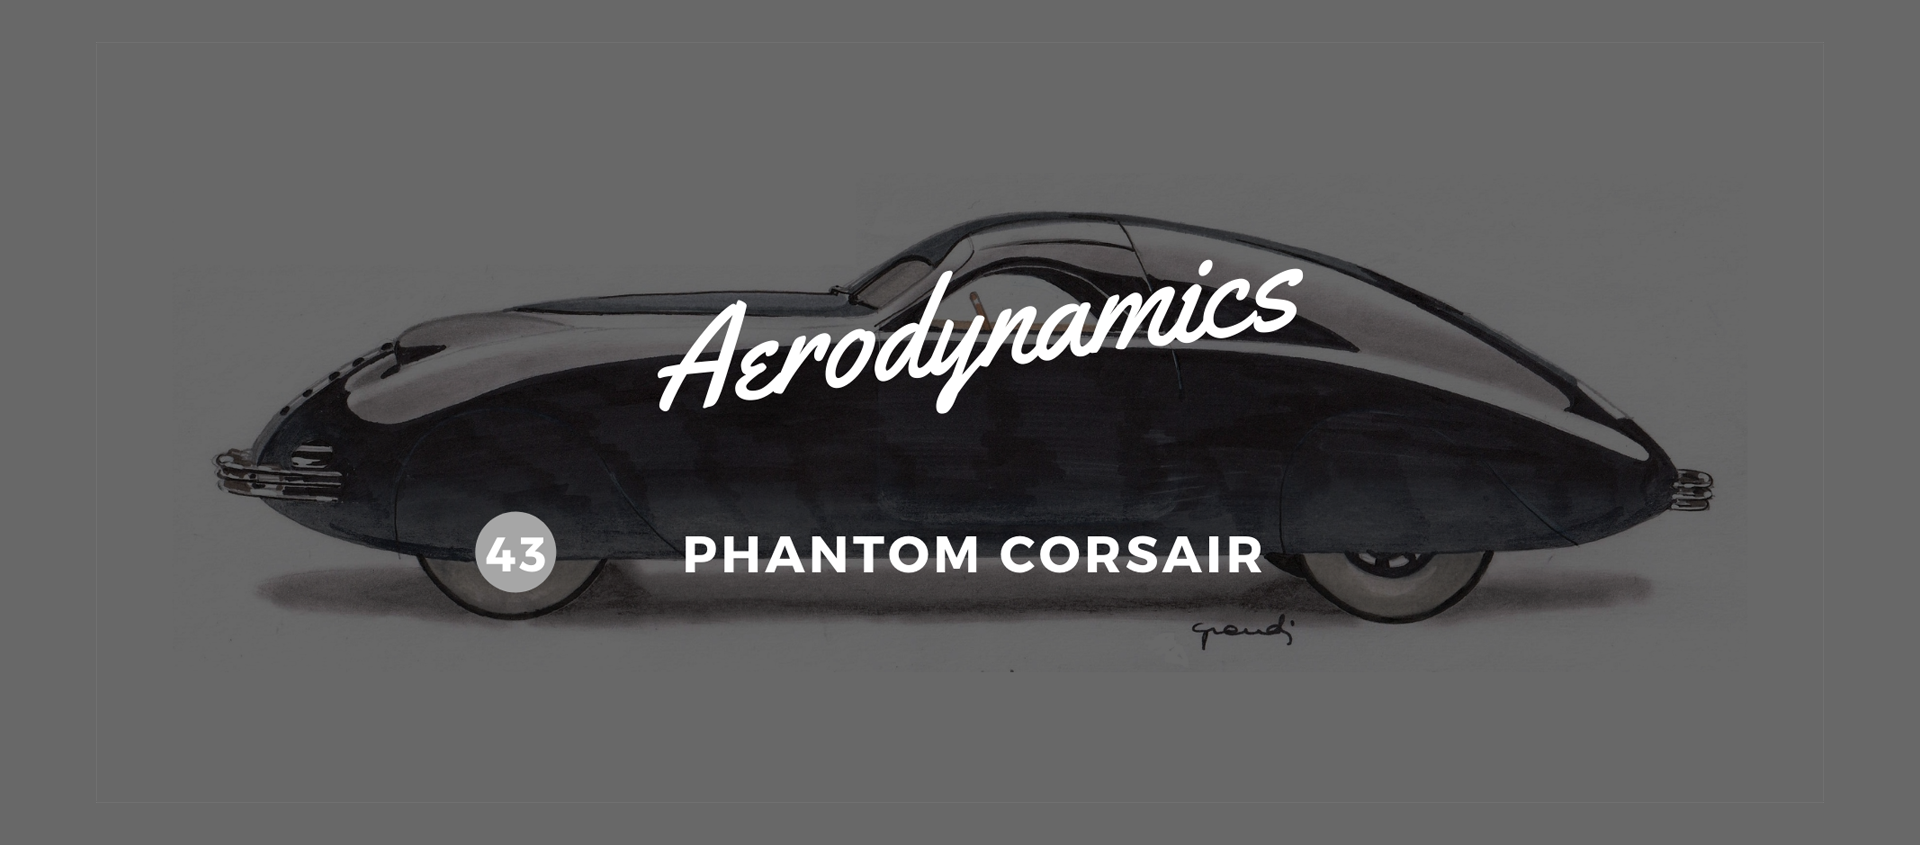 The Phantom Corsair. A fleeting dream